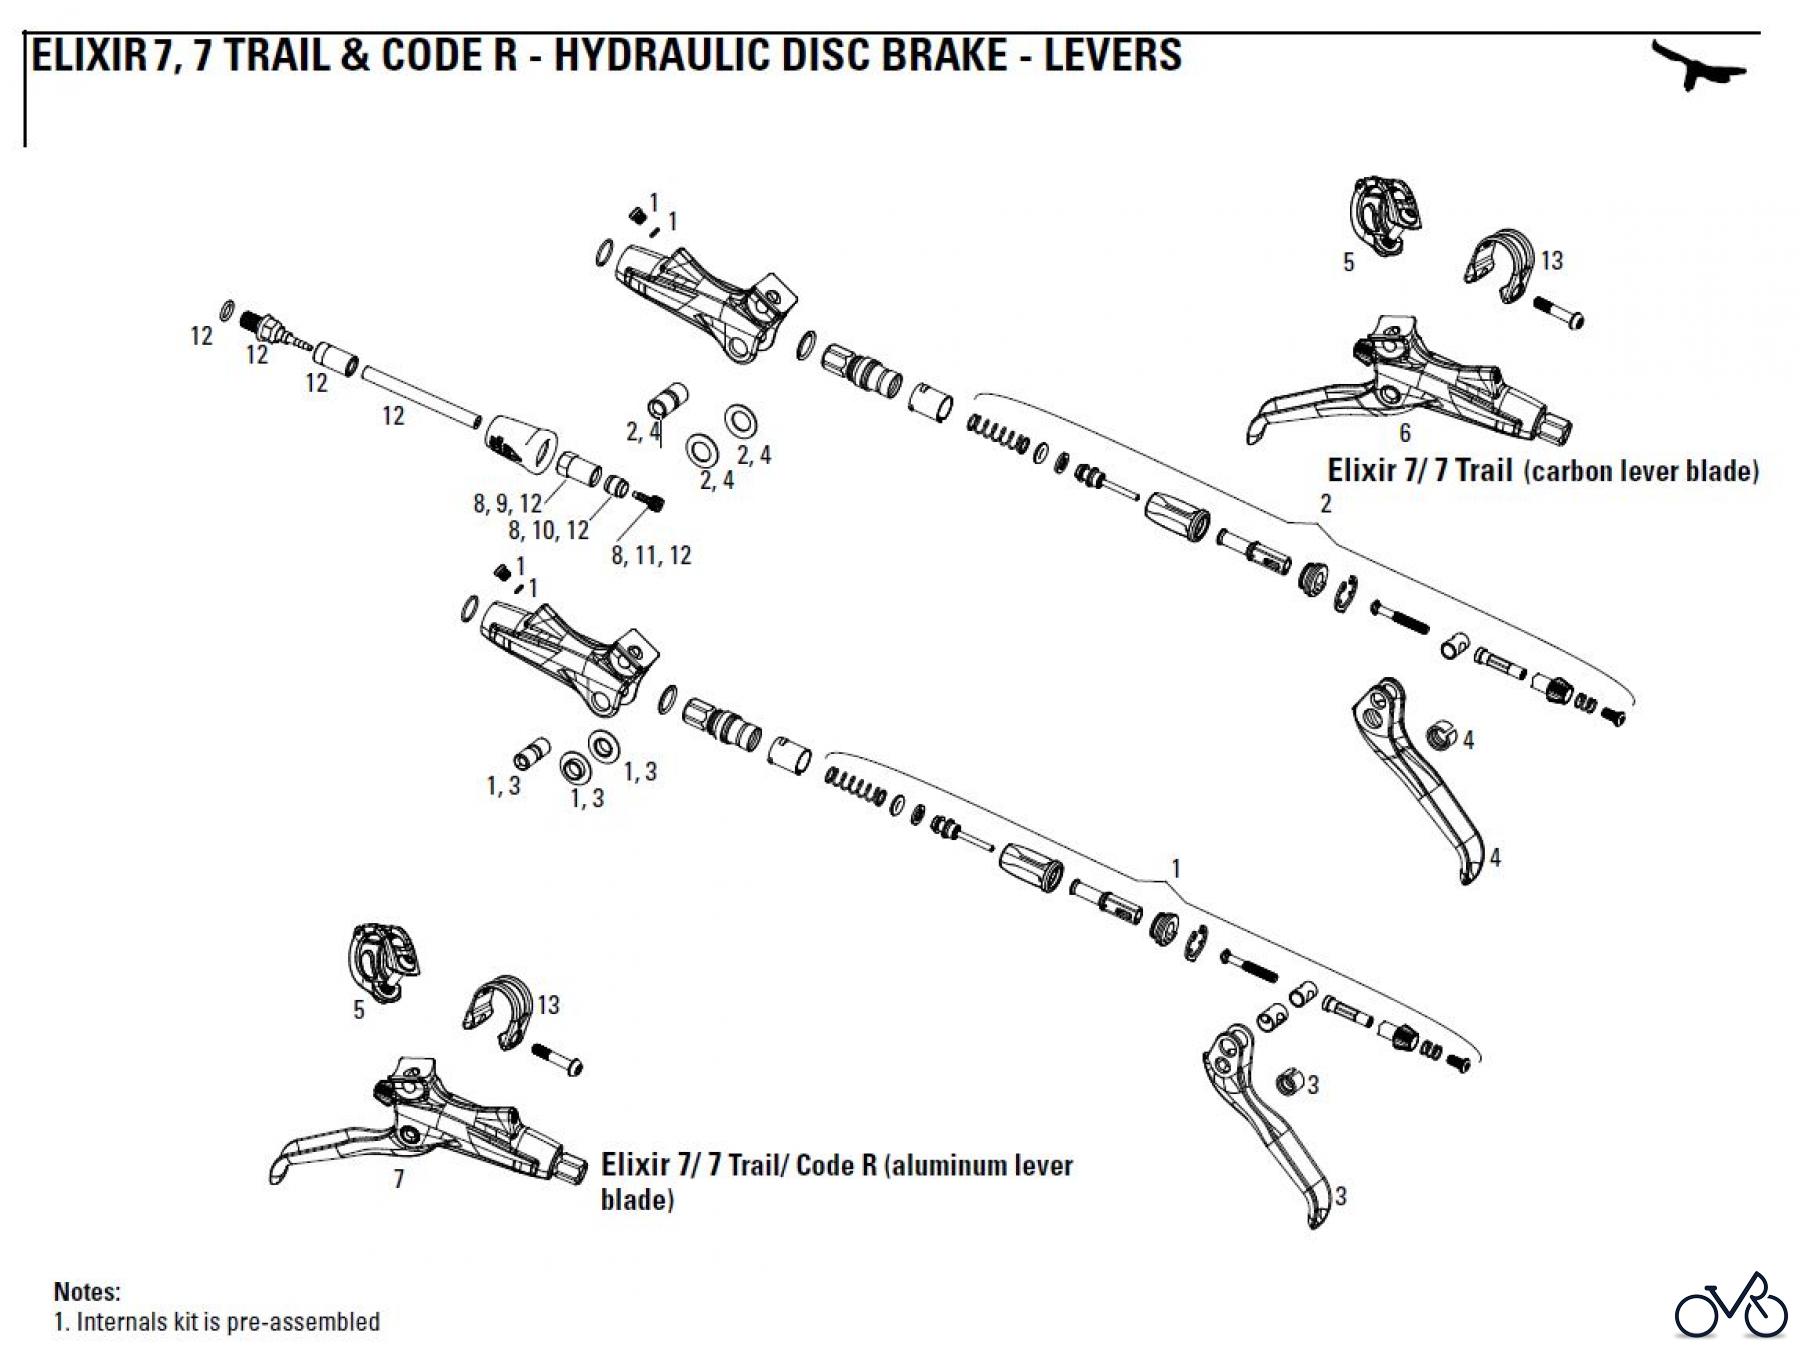  Sram avid HYDRAULIC DISC BRAKE - LEVERS ELIXIR 7, 7 TRAIL & CODE R - HYDRAULIC DISC BRAKE - LEVERS